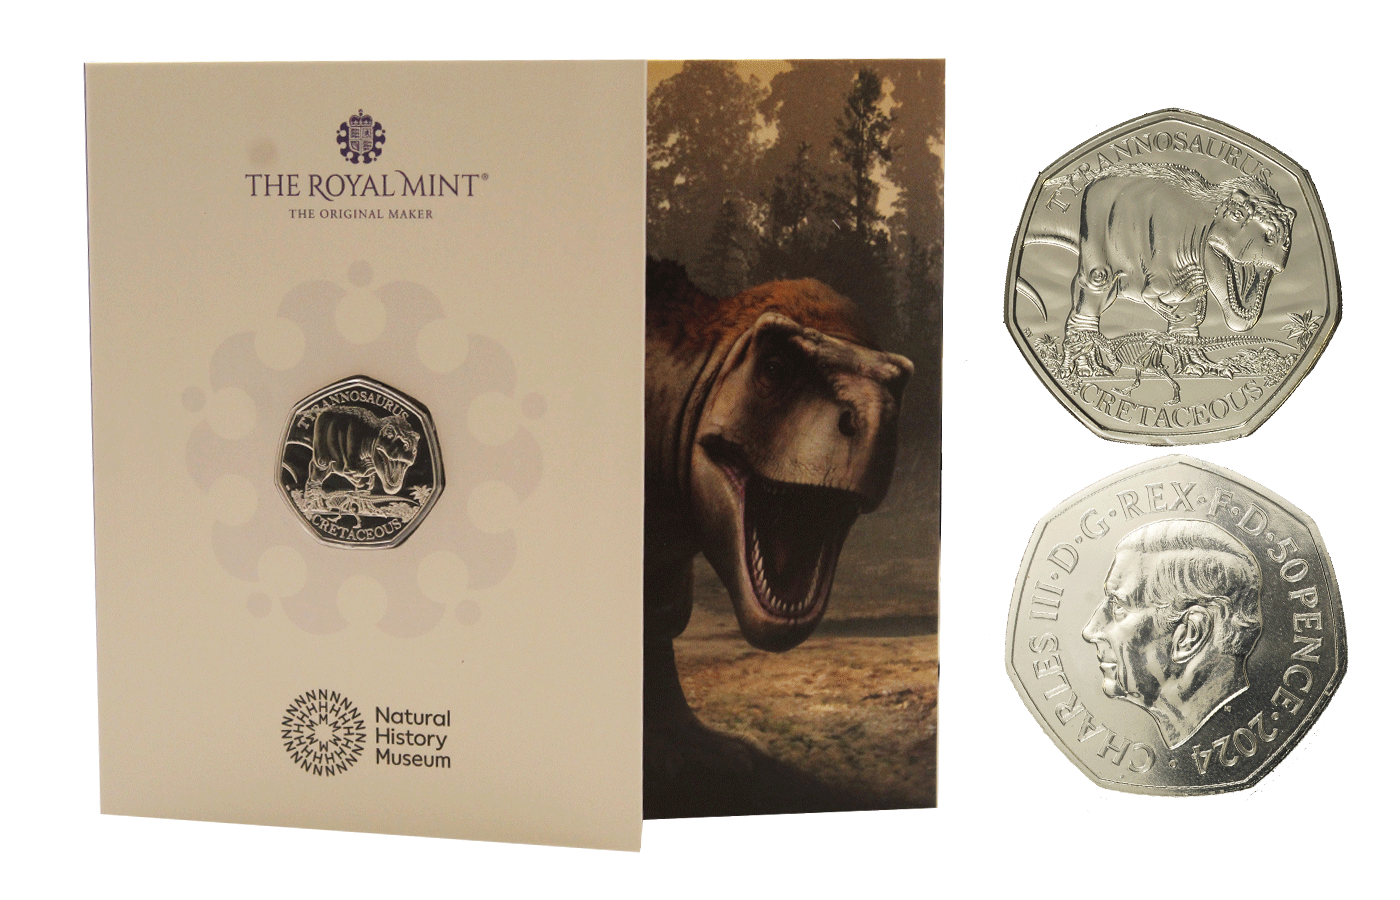 "Natural History Museum: Tyrannosaurus" - Re Carlo III - 50 Pence - In folder